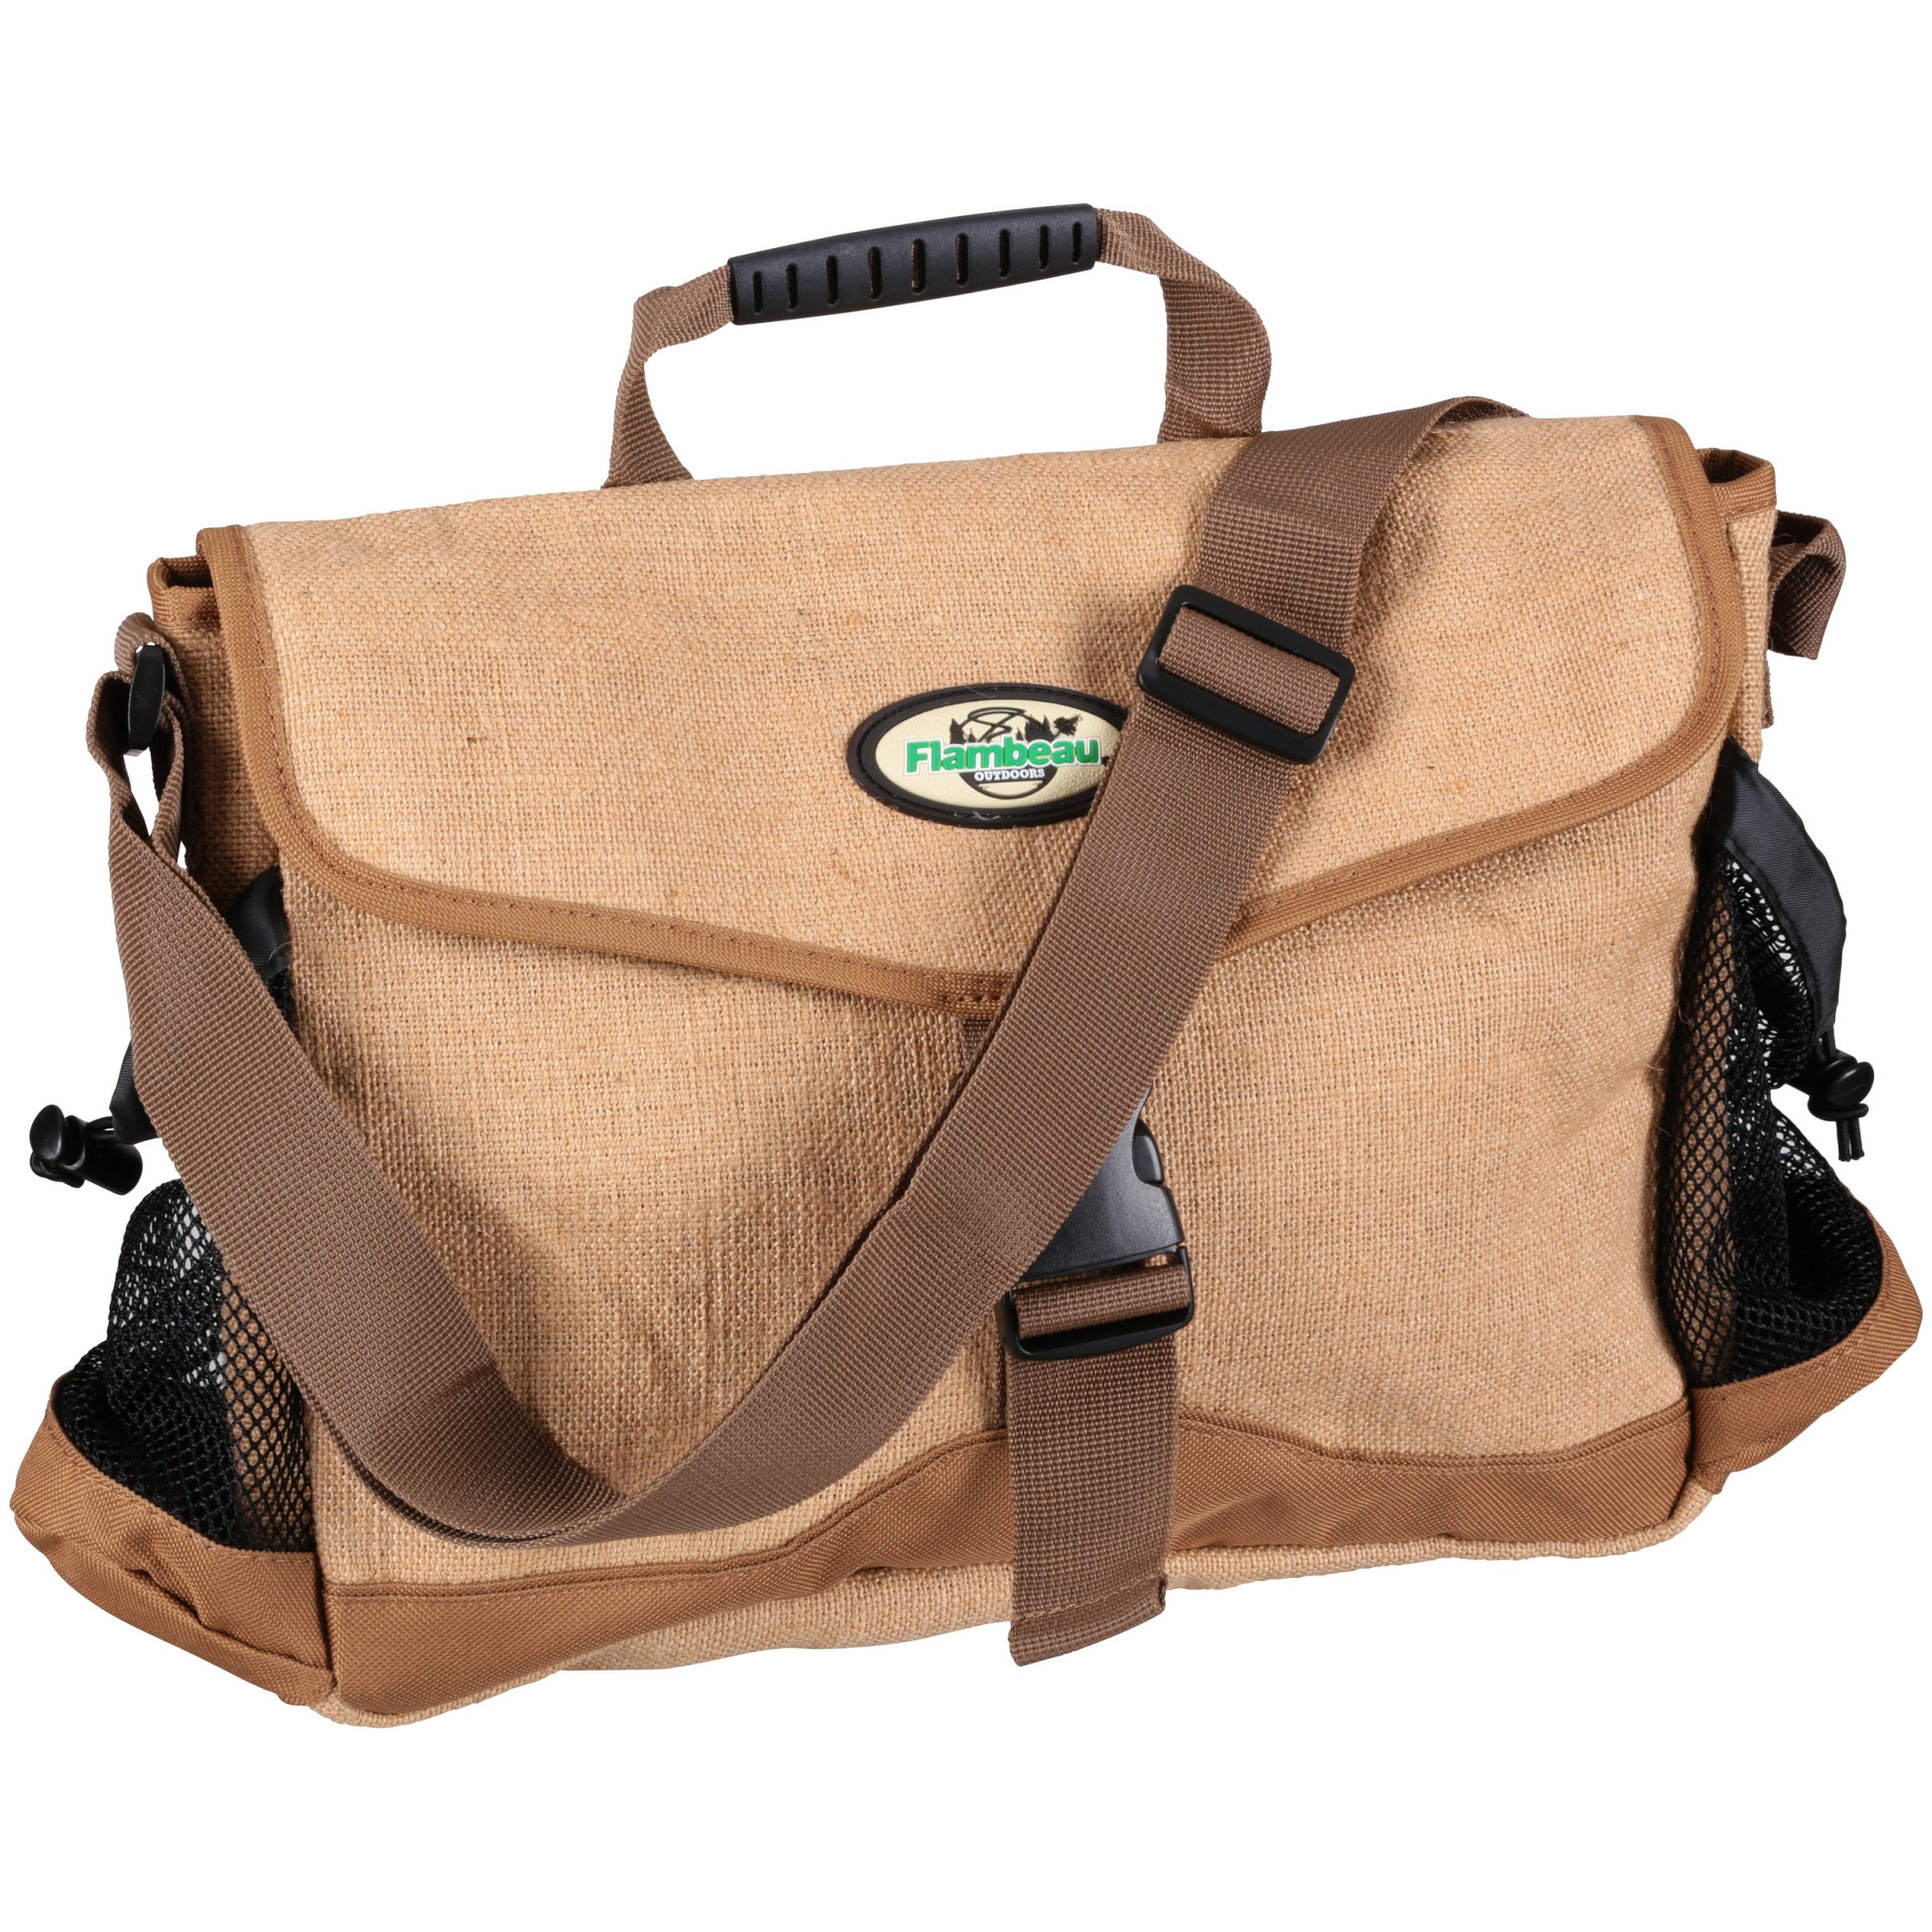 Buy Flambeau Outdoors Flax Creel Bag Online Jordan